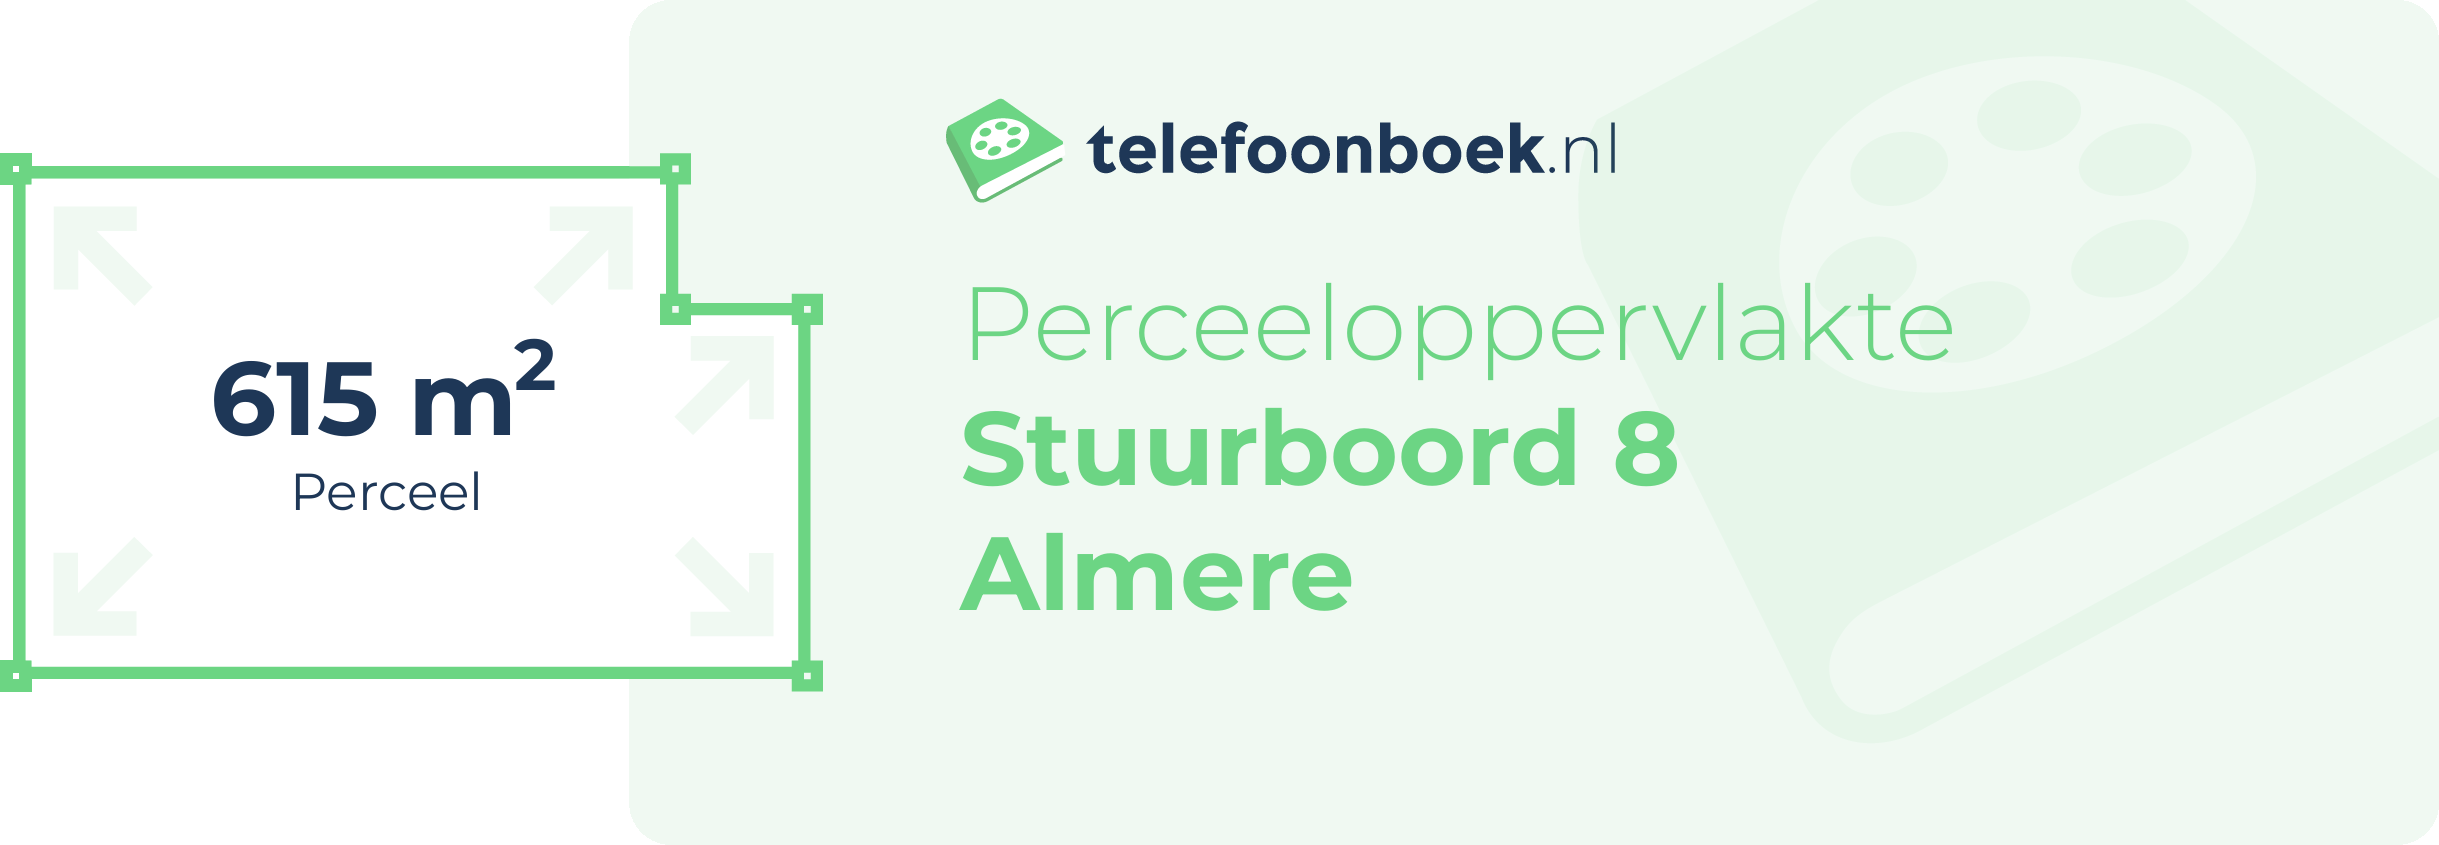 Perceeloppervlakte Stuurboord 8 Almere